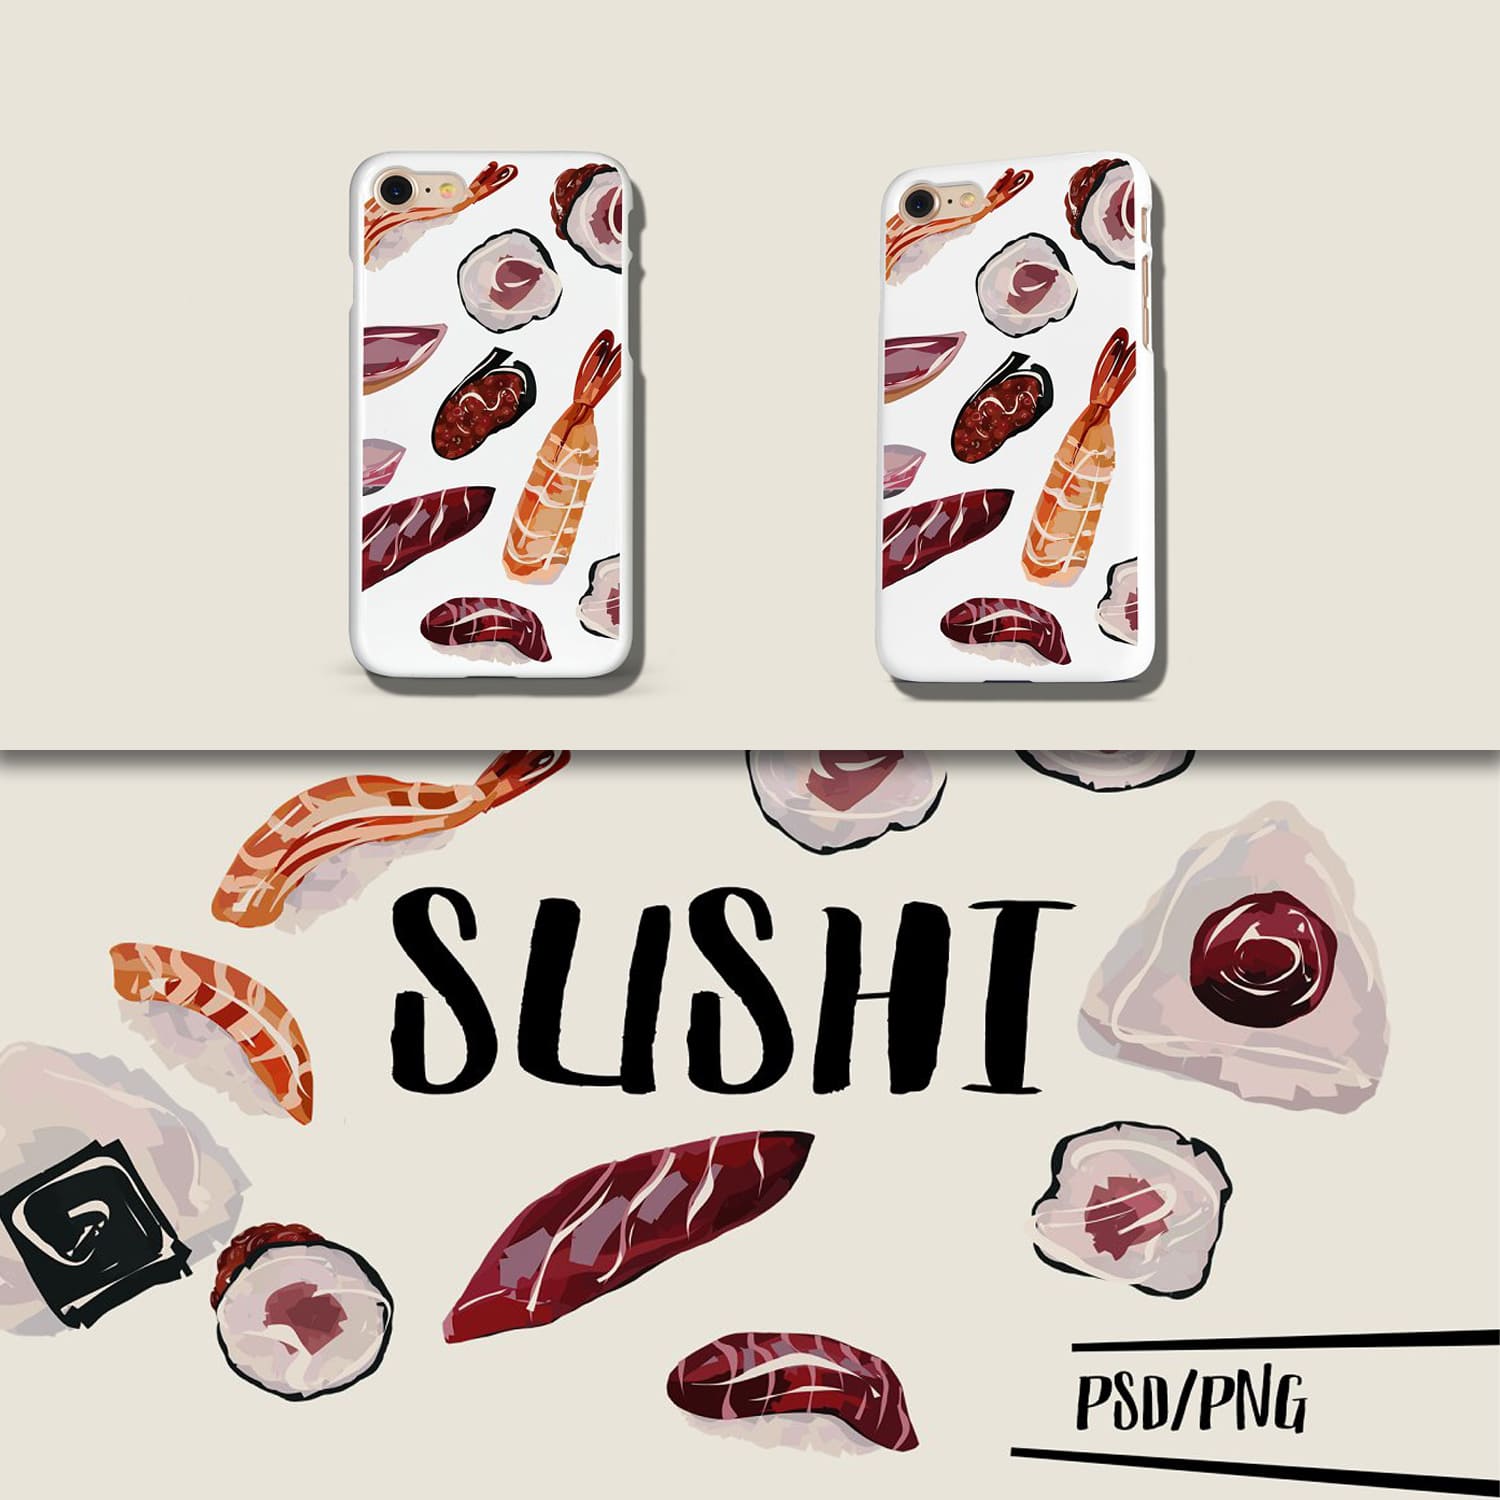 Sushi Illustrations Kit cover image.